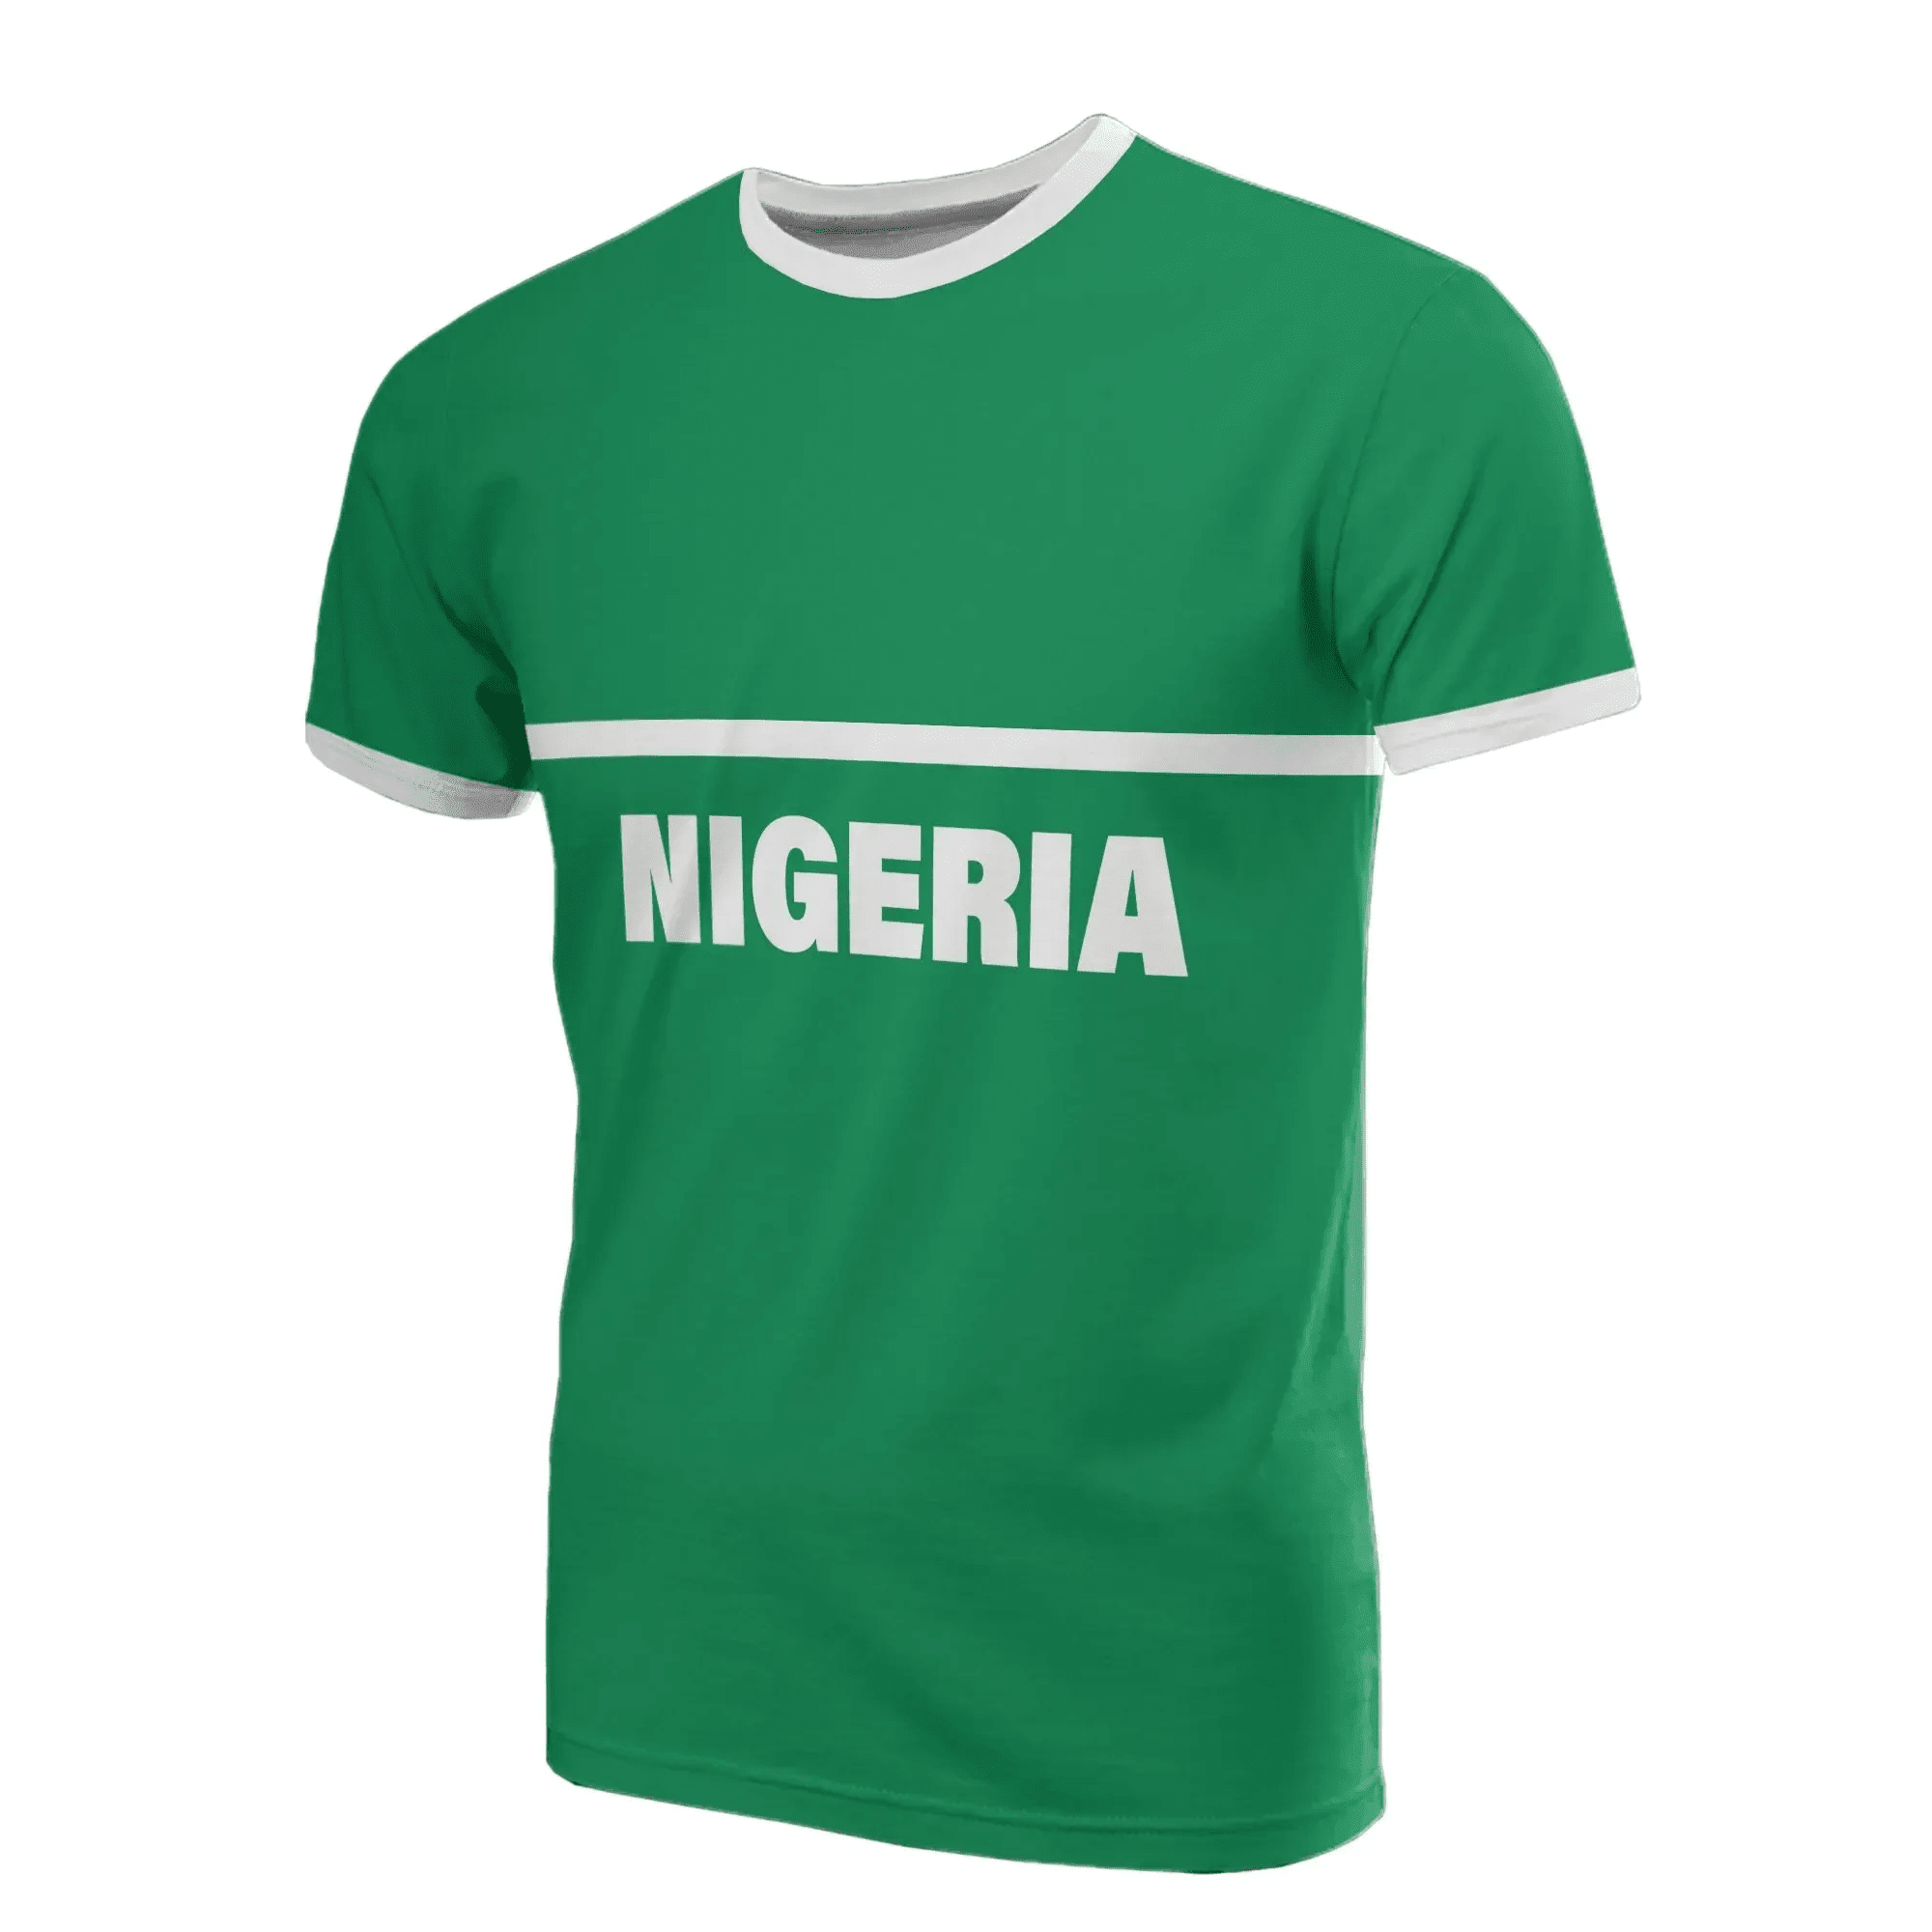 Nigeria T-Shirt - Horizontal Style - BN12